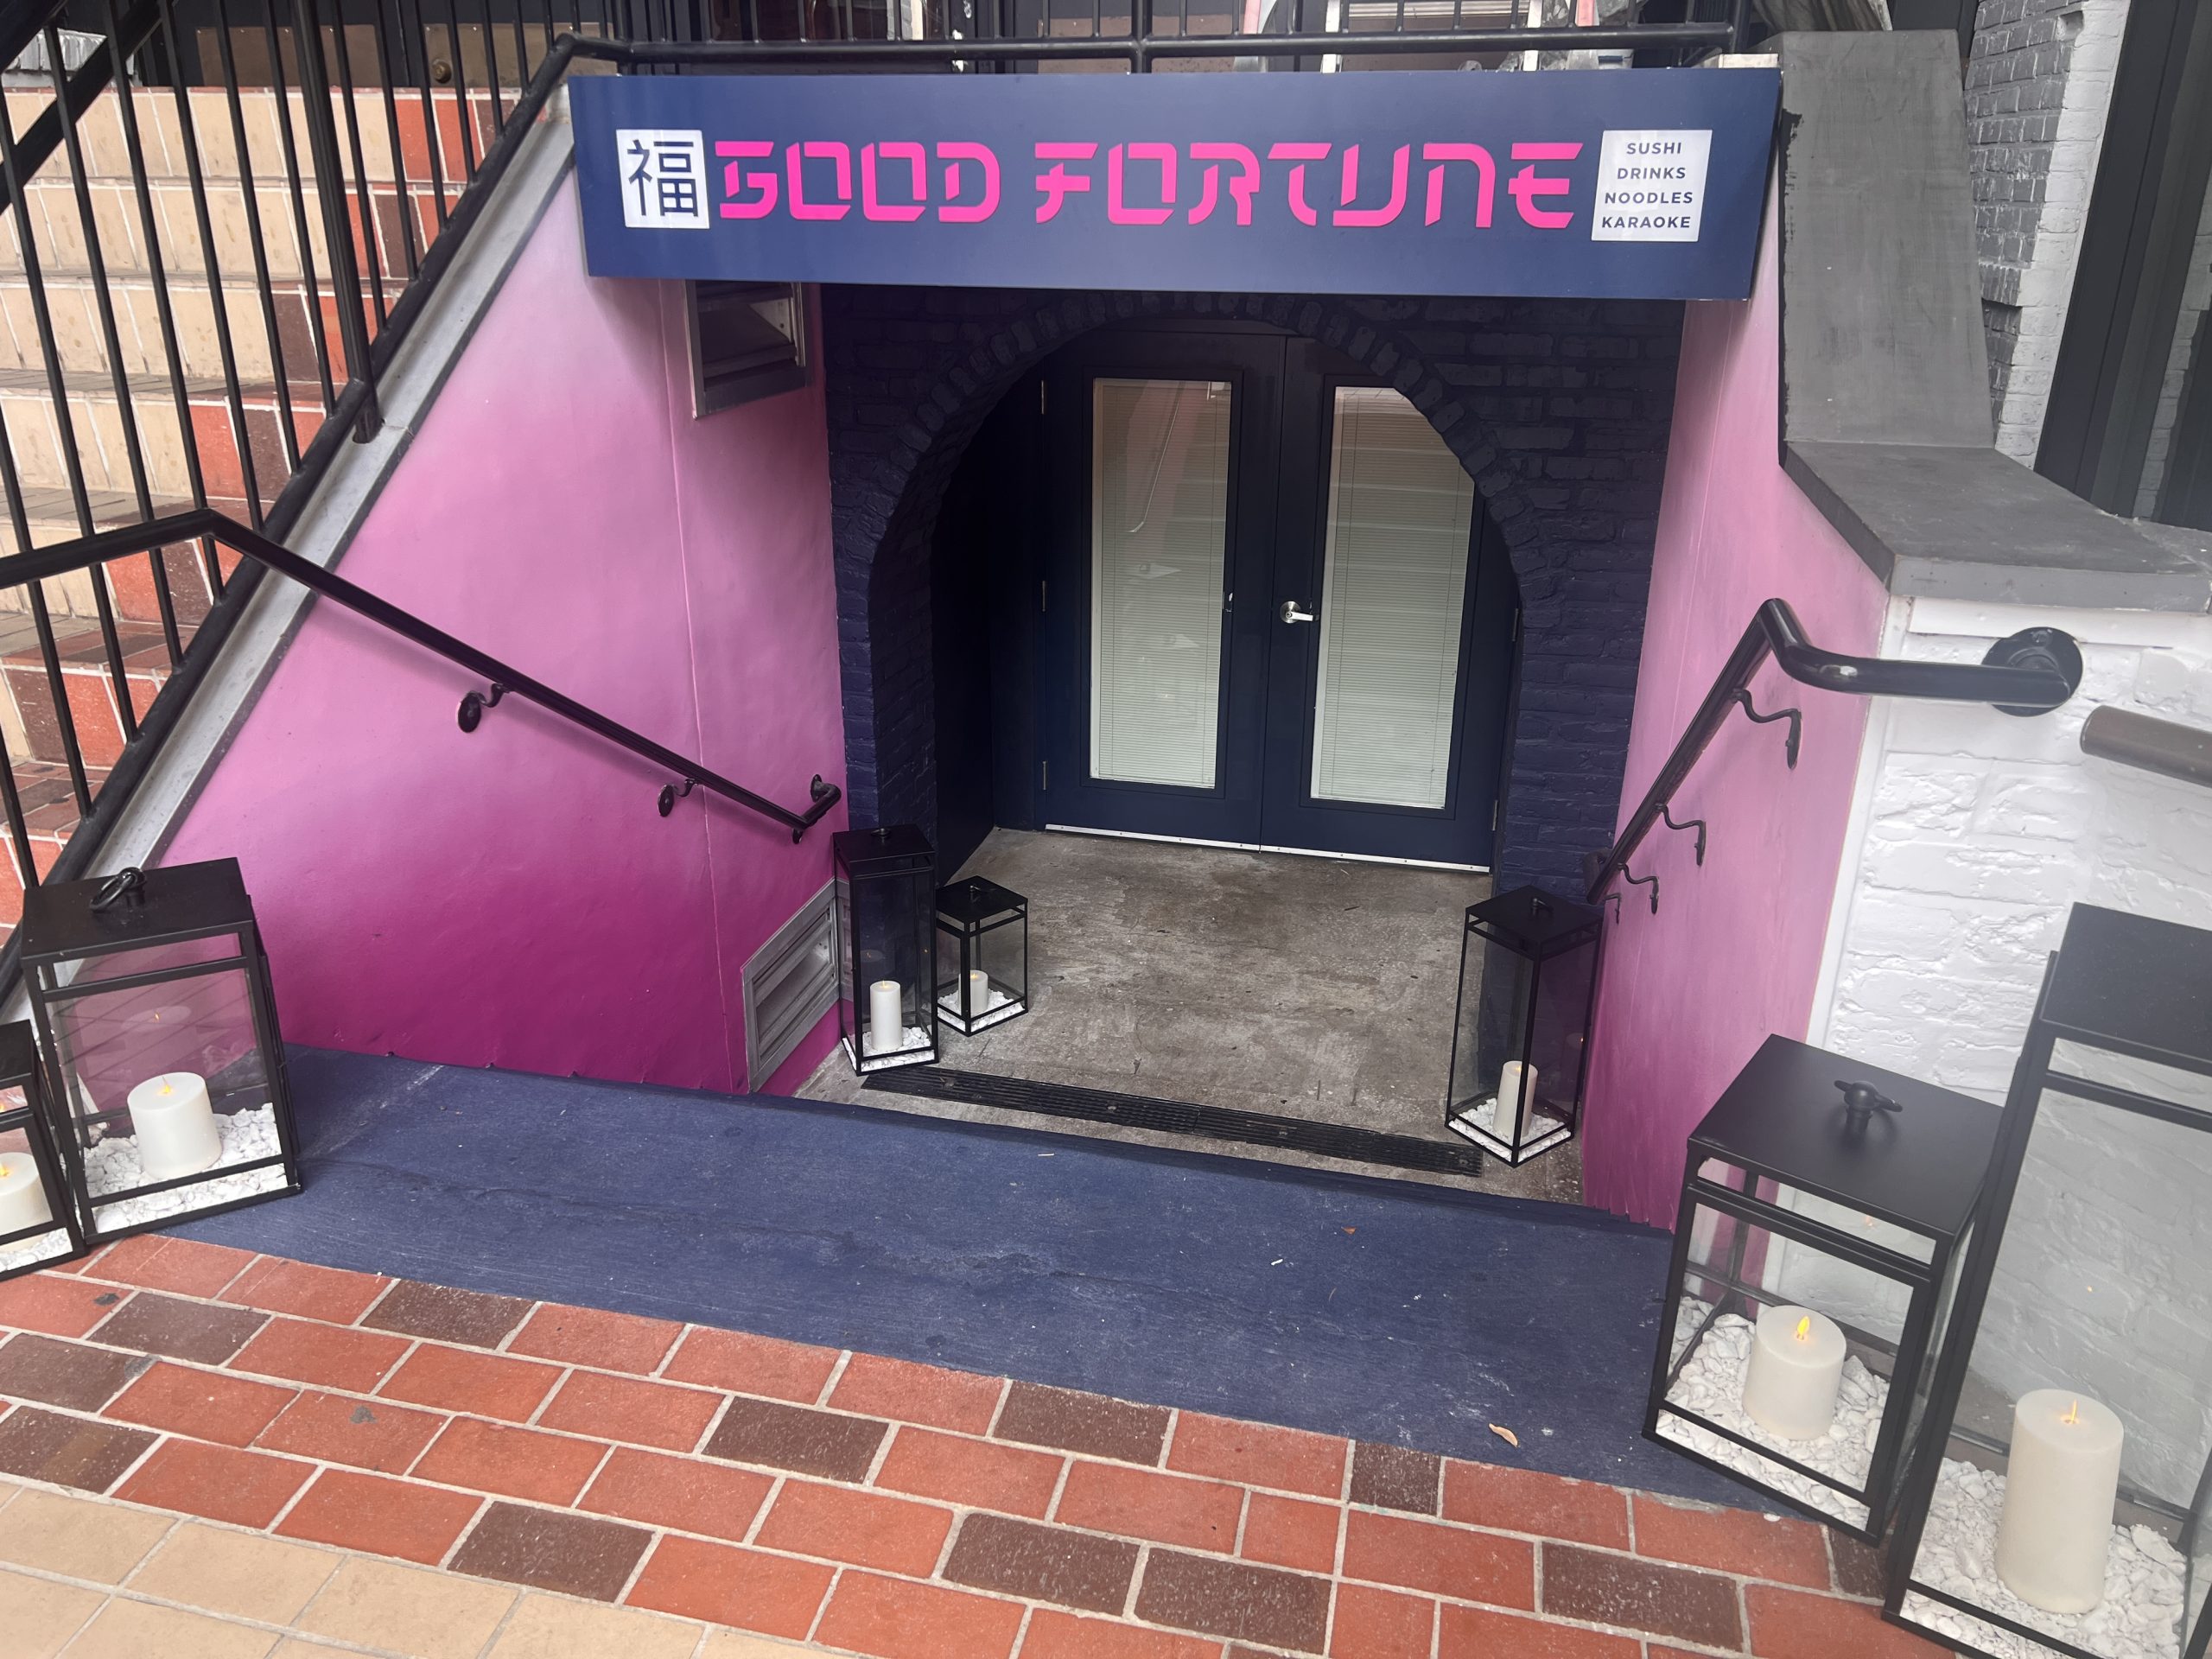 Good Fortune Entrance